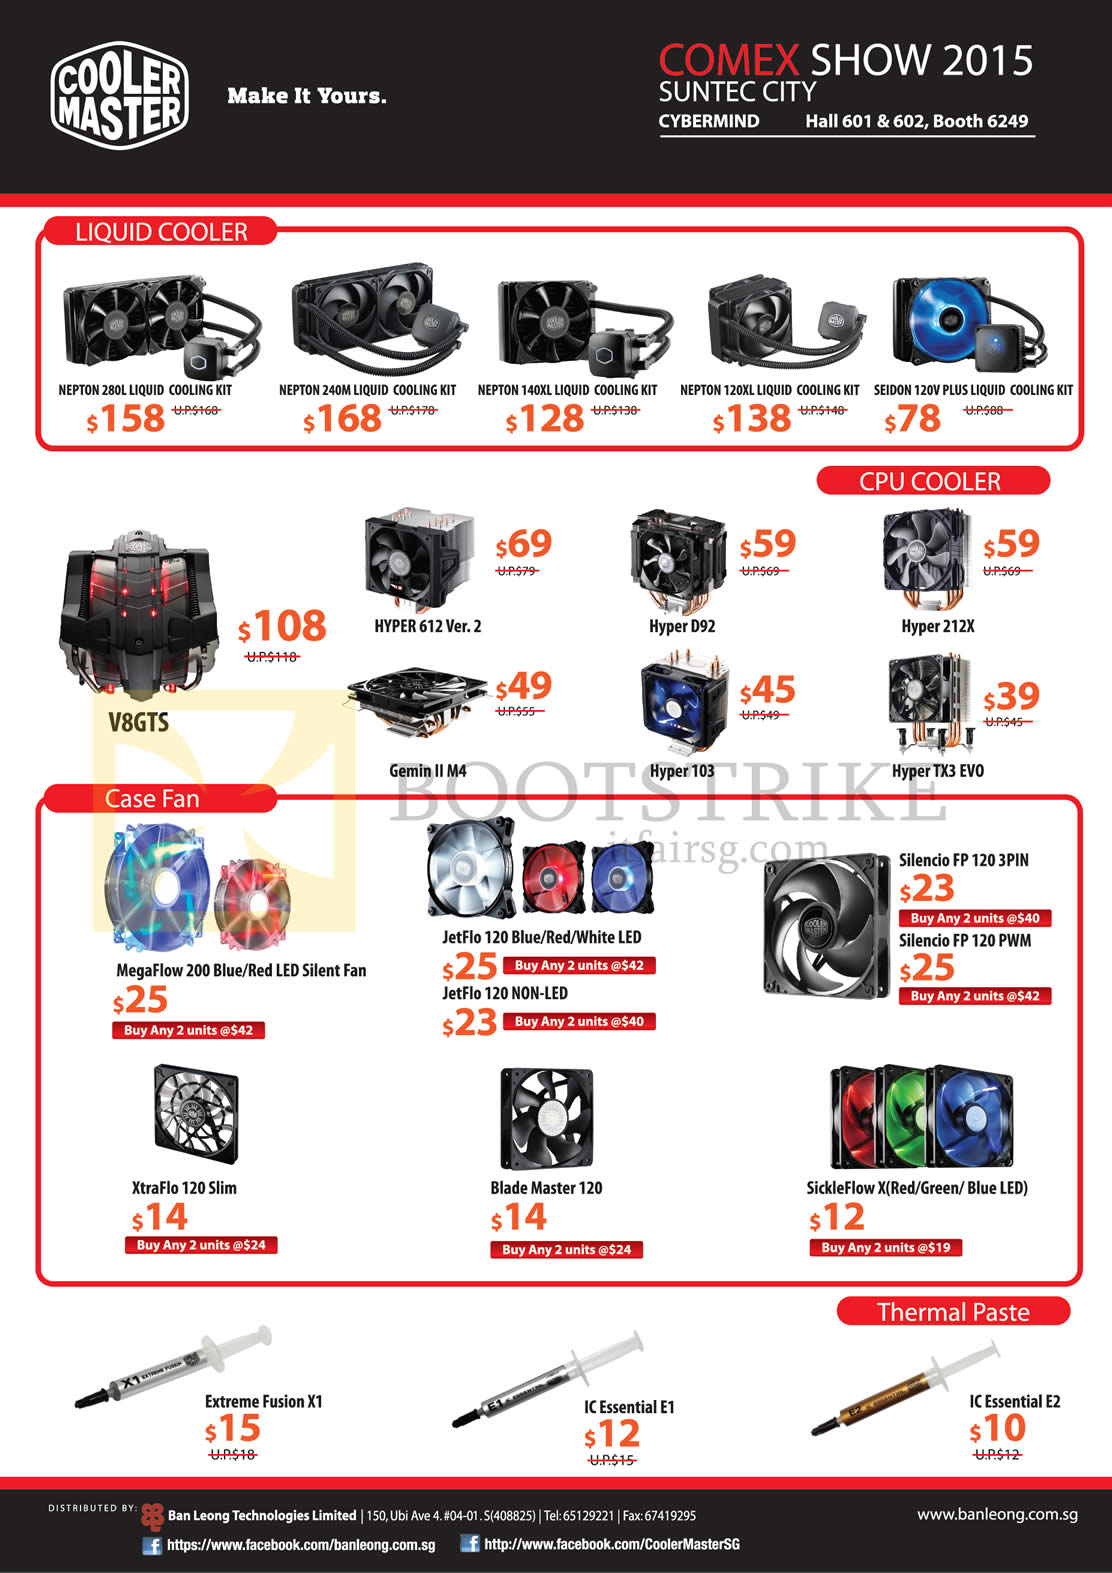 COMEX 2015 price list image brochure of Cooler Master Liquid Cooler, CPU Cooler, Case Fan, Thermal Paste